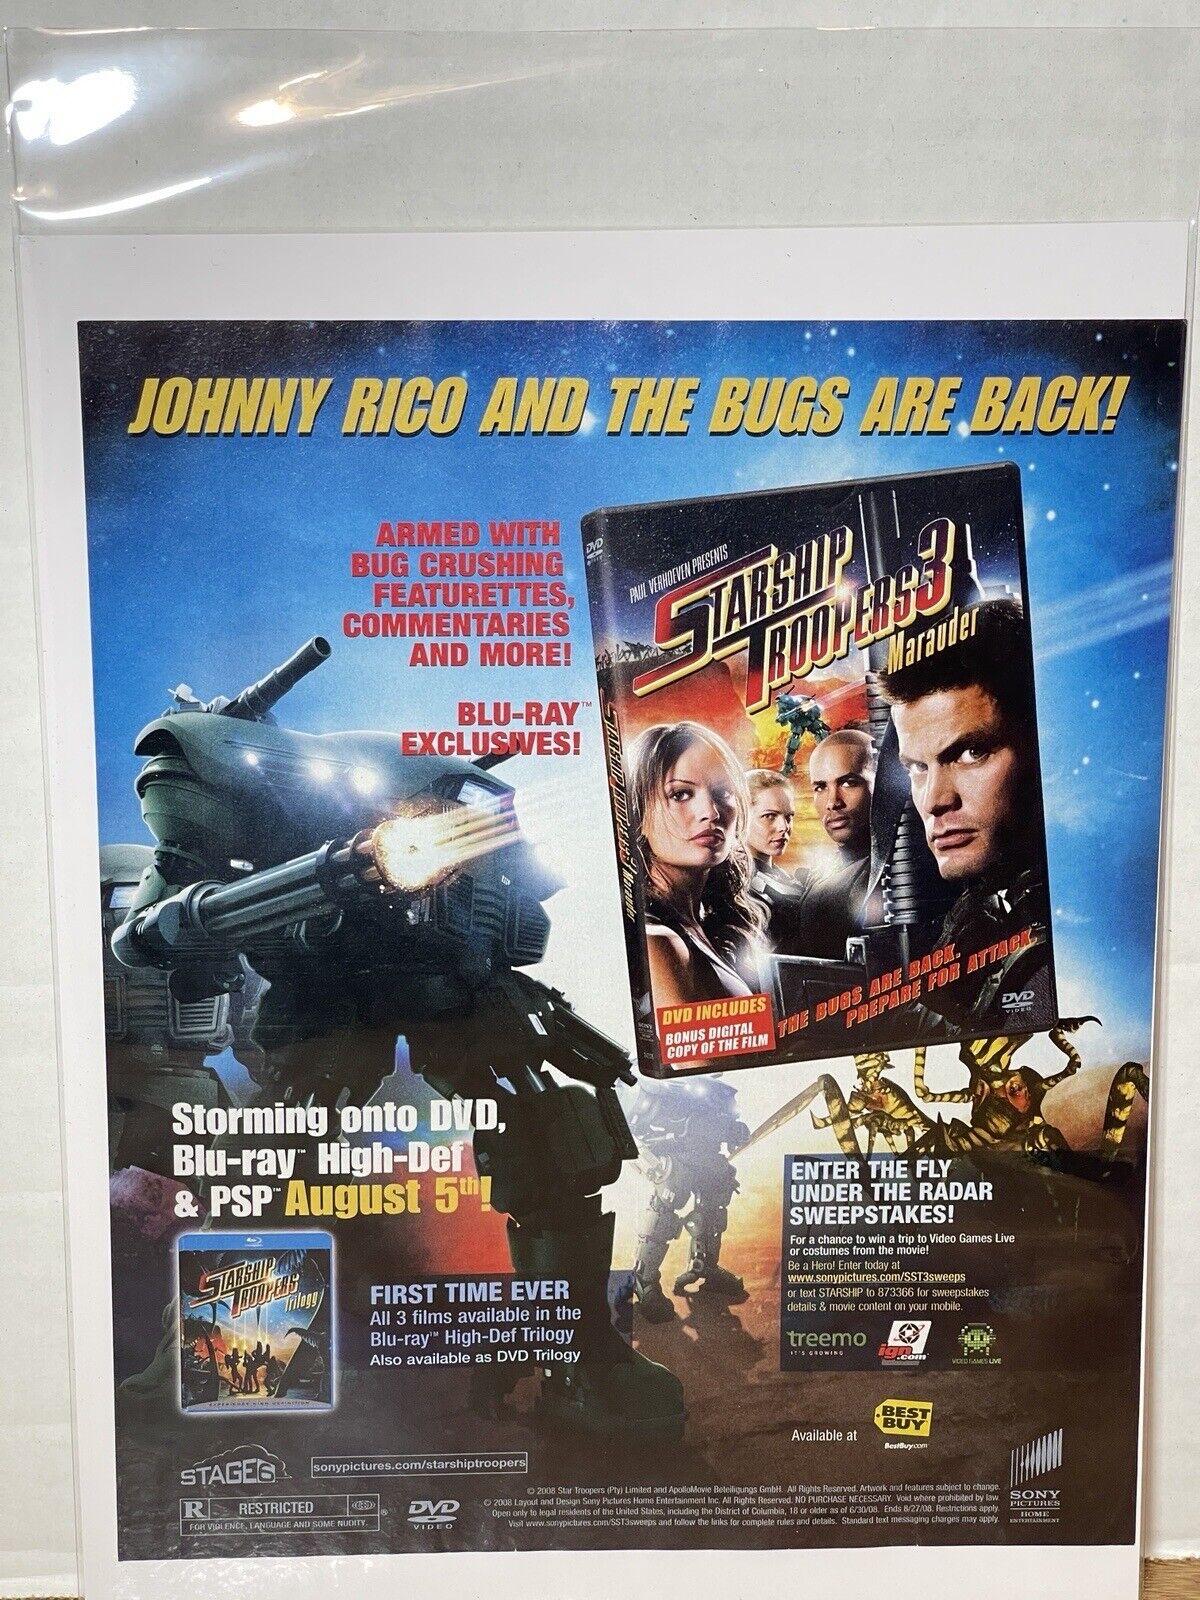 2008 Starship Troopers 3 Marauders DVD Release Promo Photo Art Vintage Print Ad